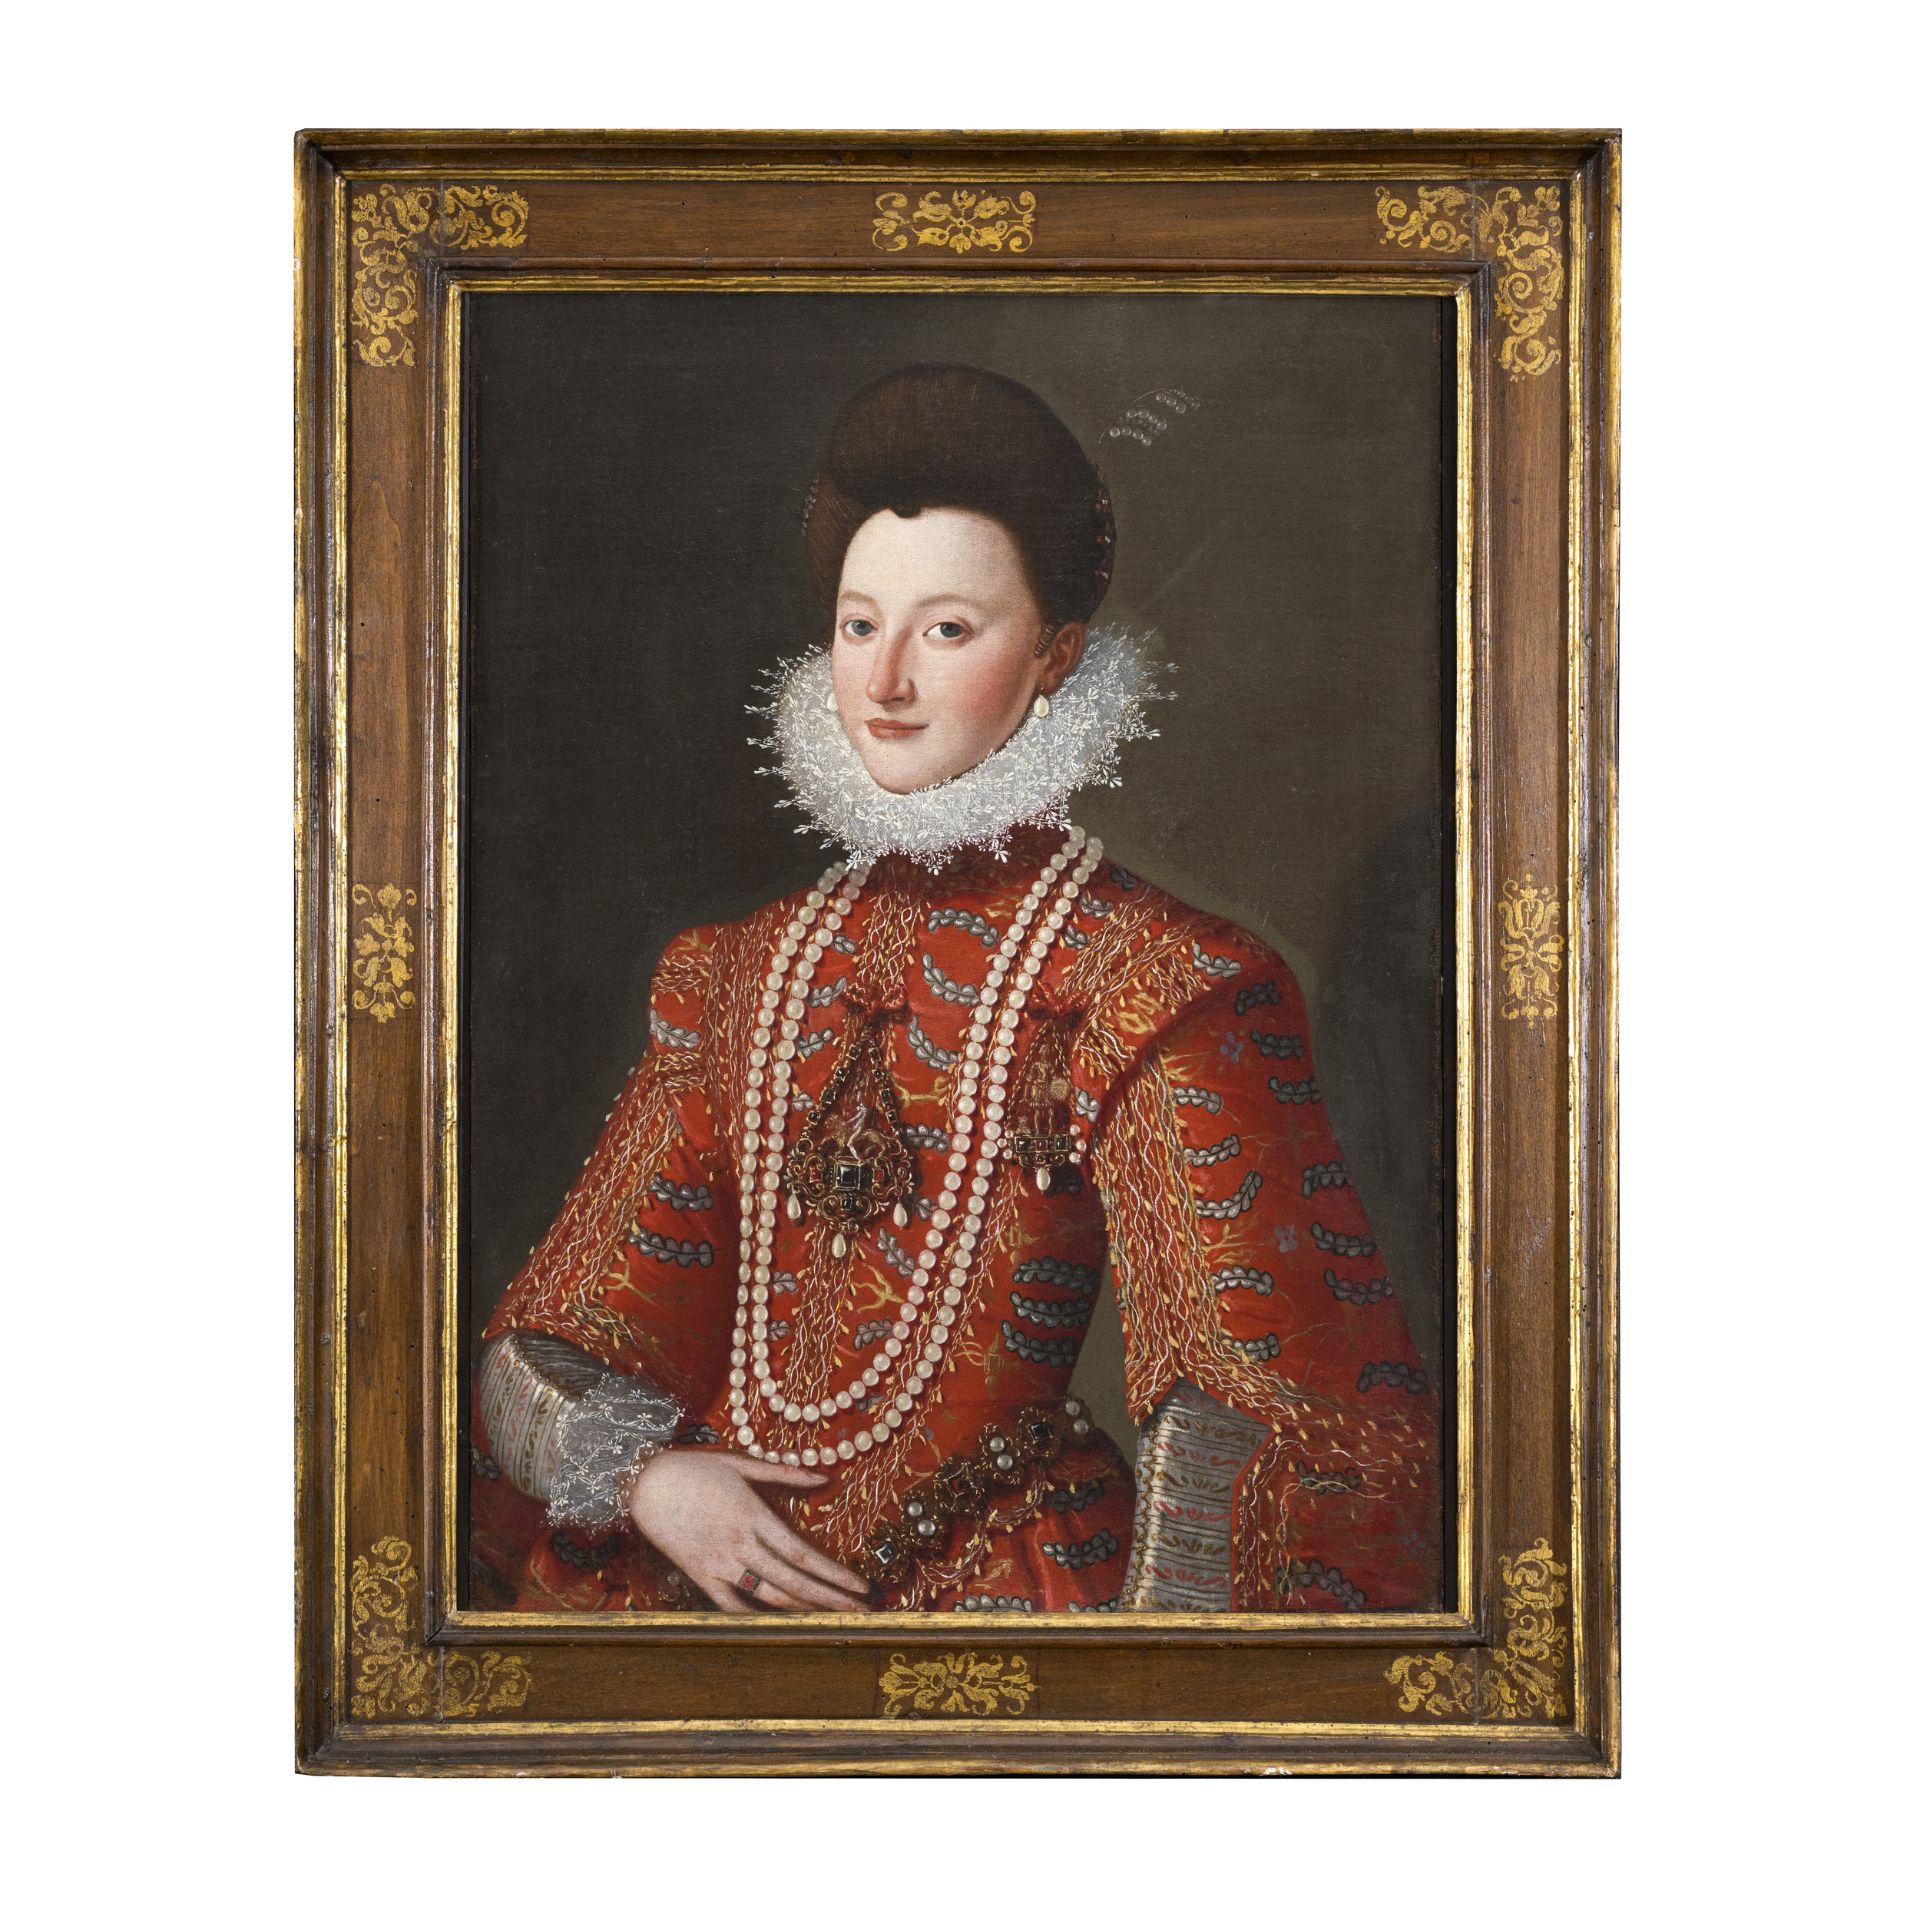 Franz Pourbus II (Anversa 1569 - Parigi 1622) attribuito